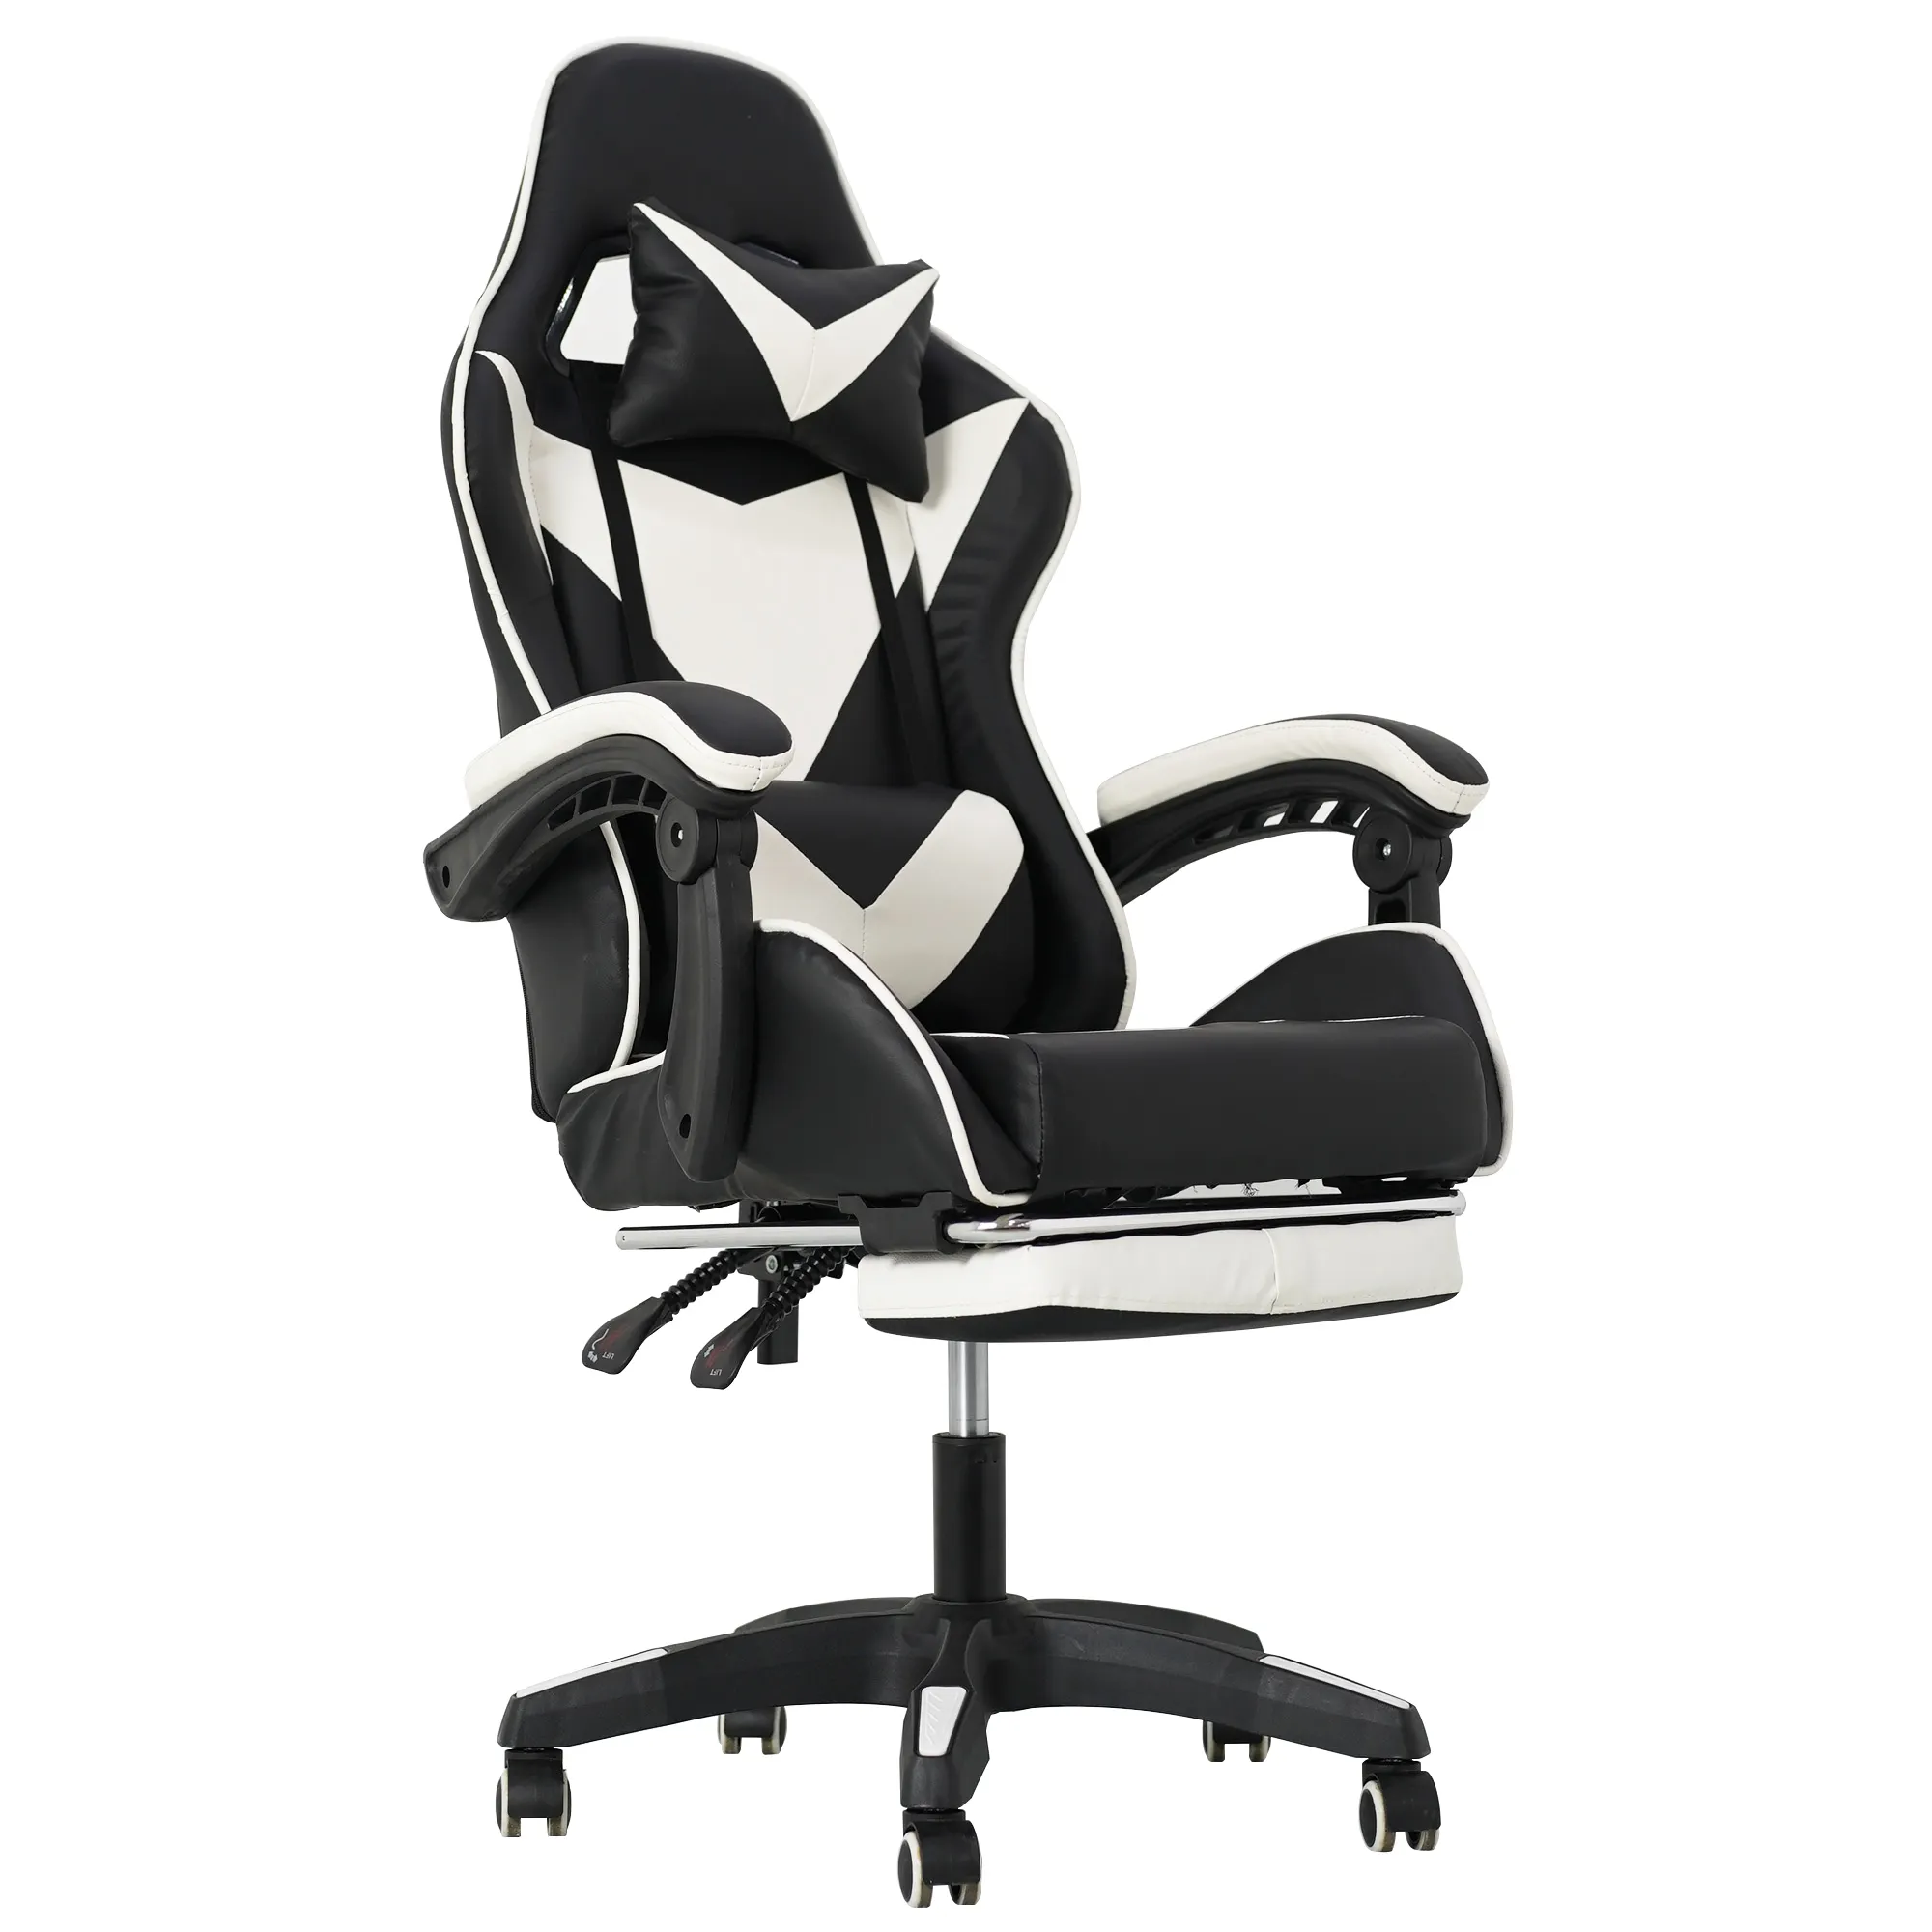 Beste Qualität Großhandel Gaming Stuhl Computer Gamer PC Racing Gaming Stuhl Gaming Stuhl Mit Fuß stütze